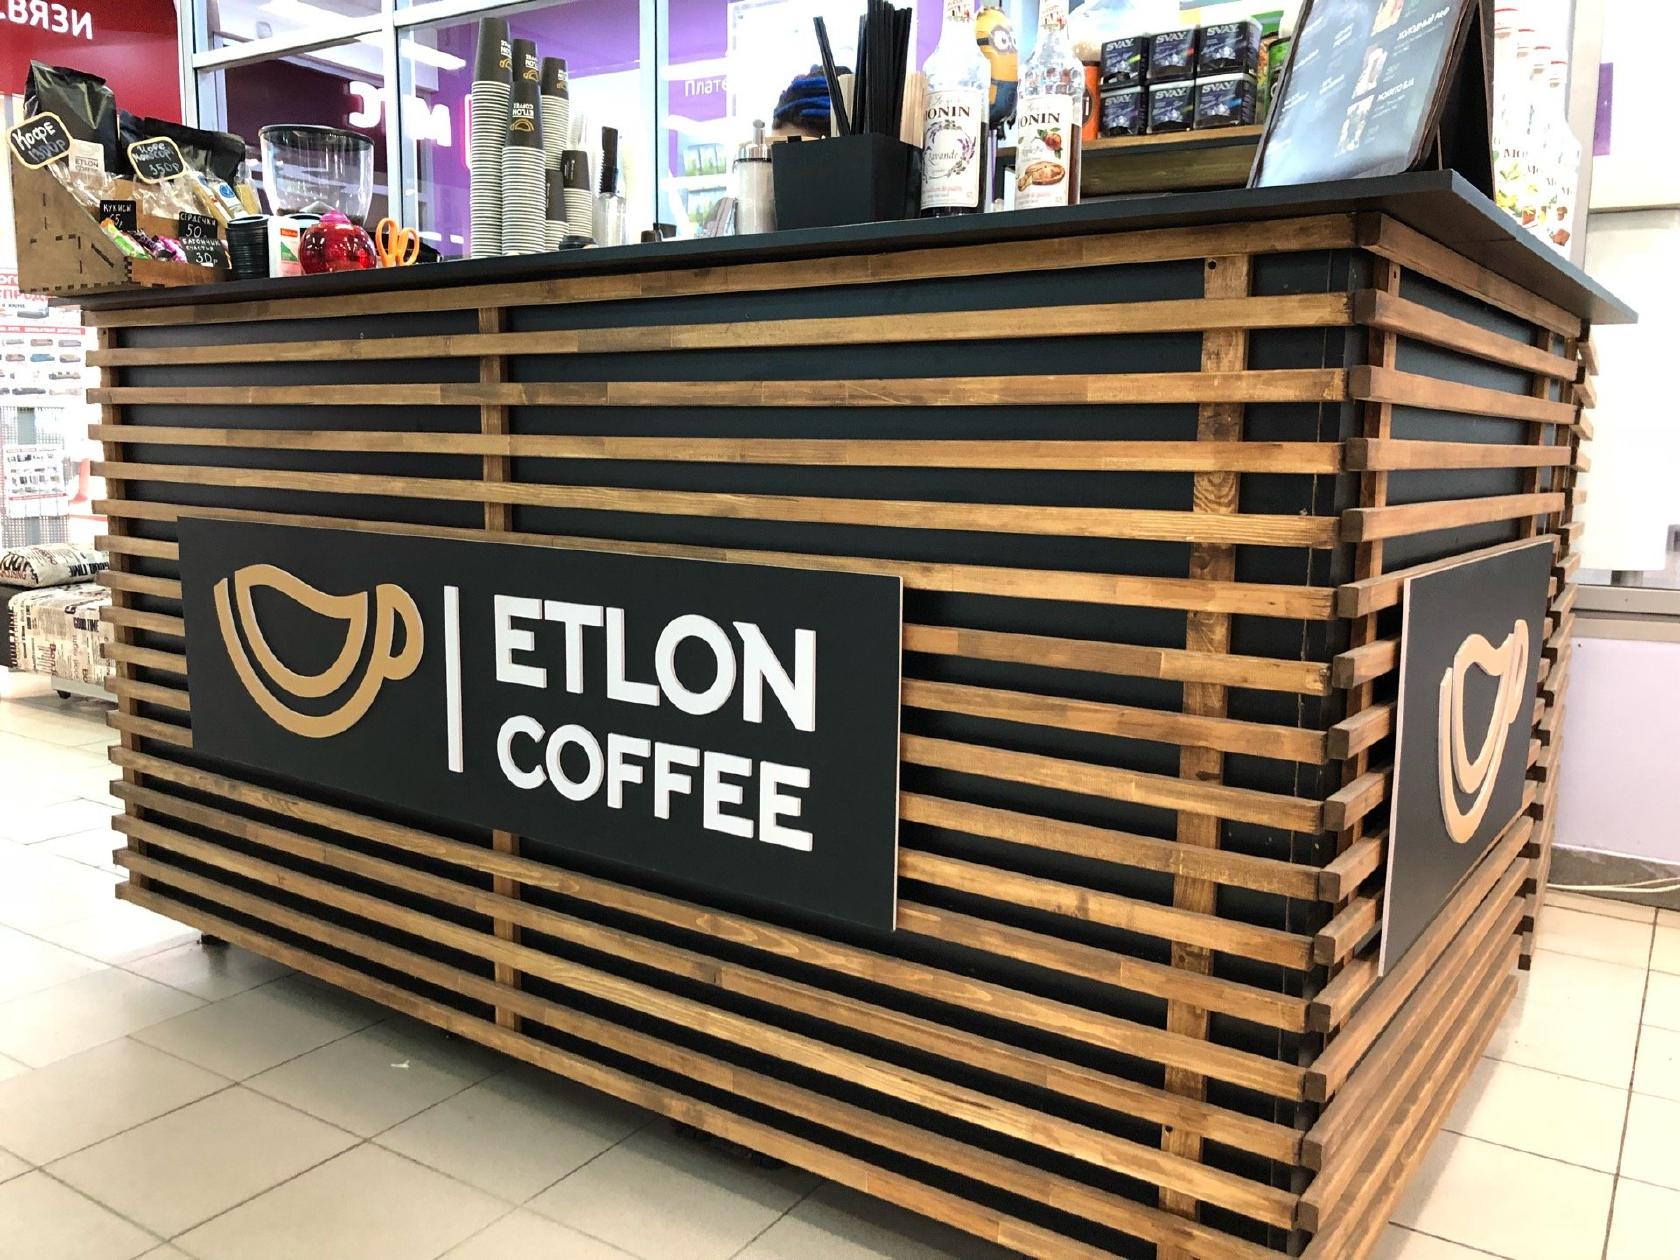 Элтон кофе. Etlon Coffee Санкт-Петербург. Etlon Coffee меню. Элтон кофе кофейня. Кофейная стойка.